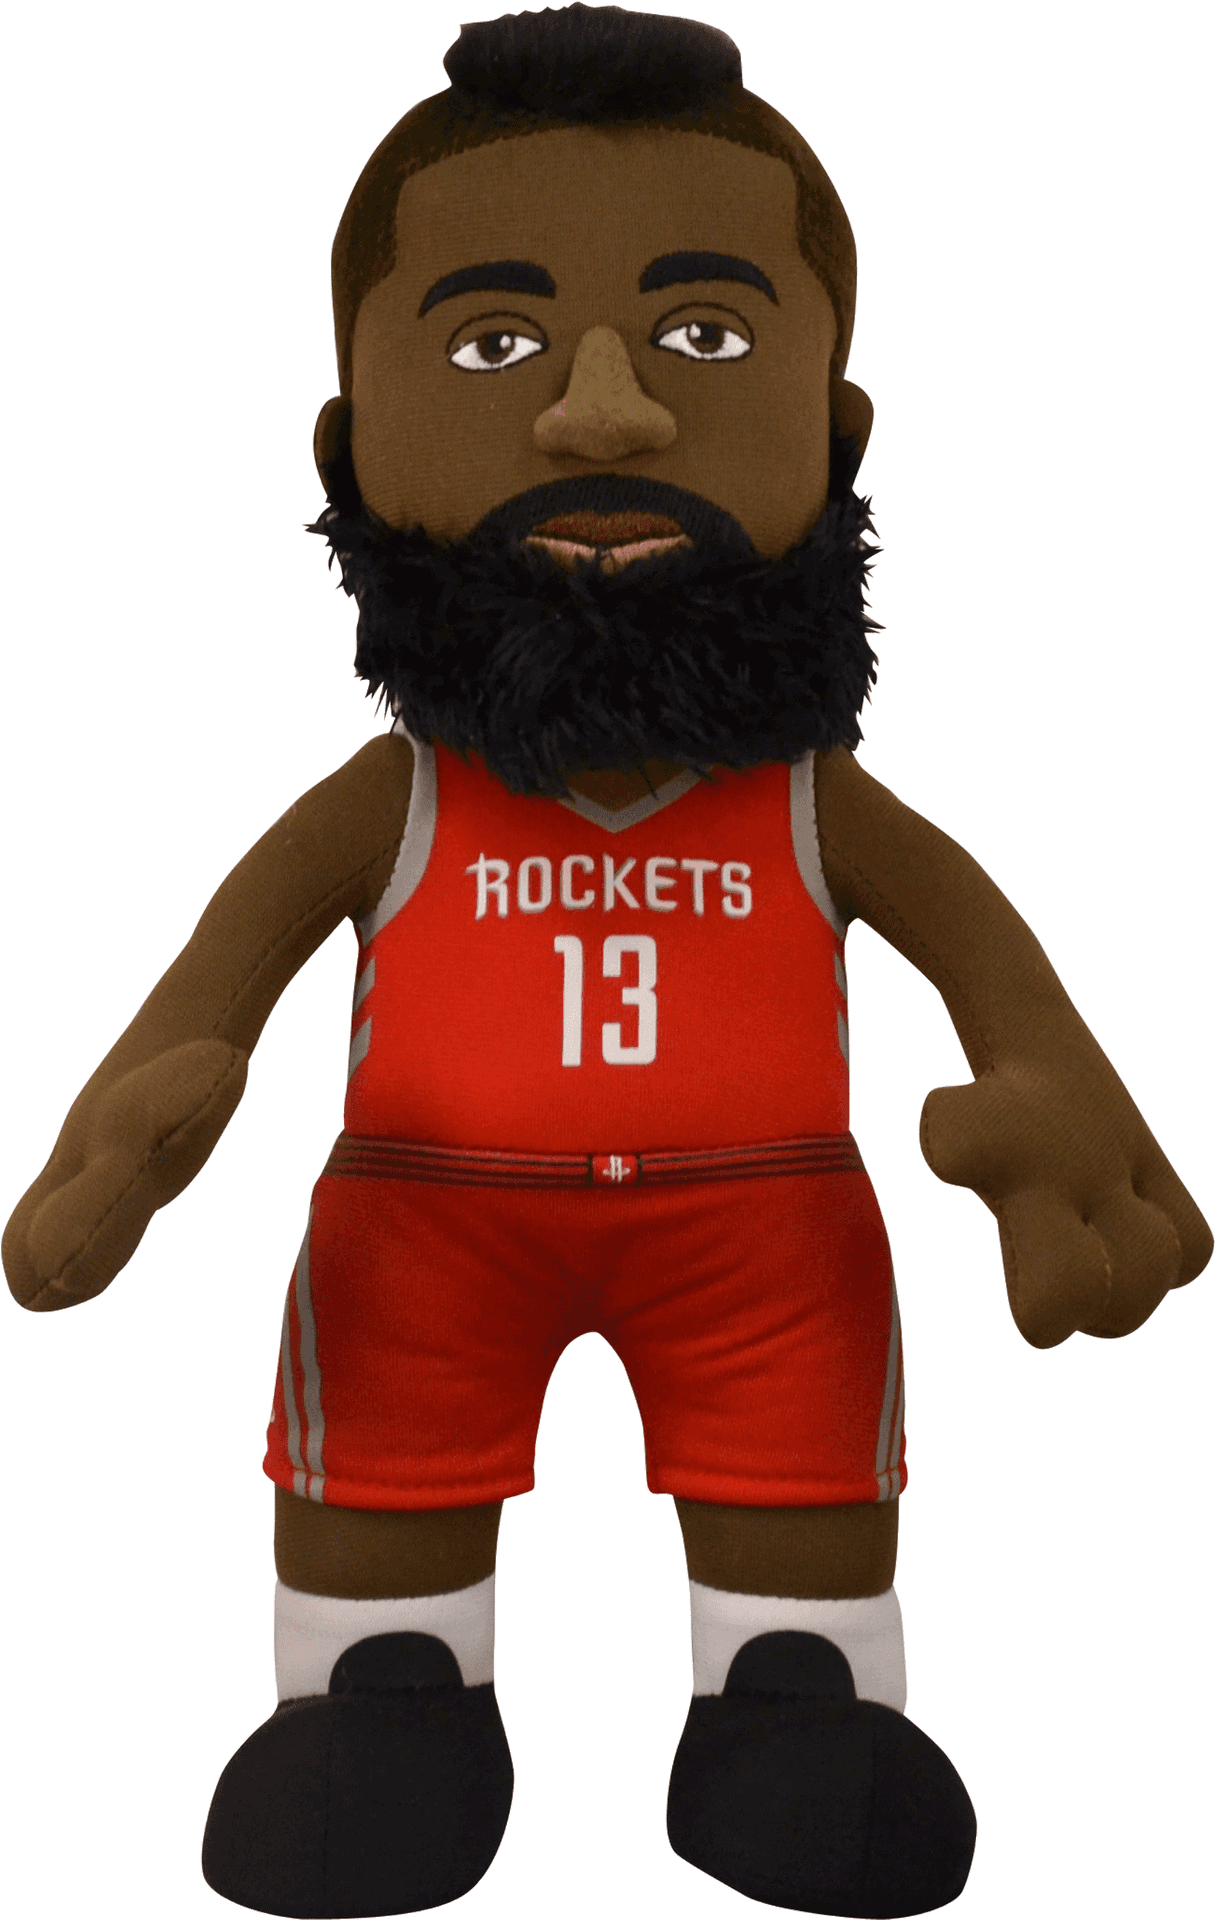 Houston Rockets Plush Toy Number13 PNG image